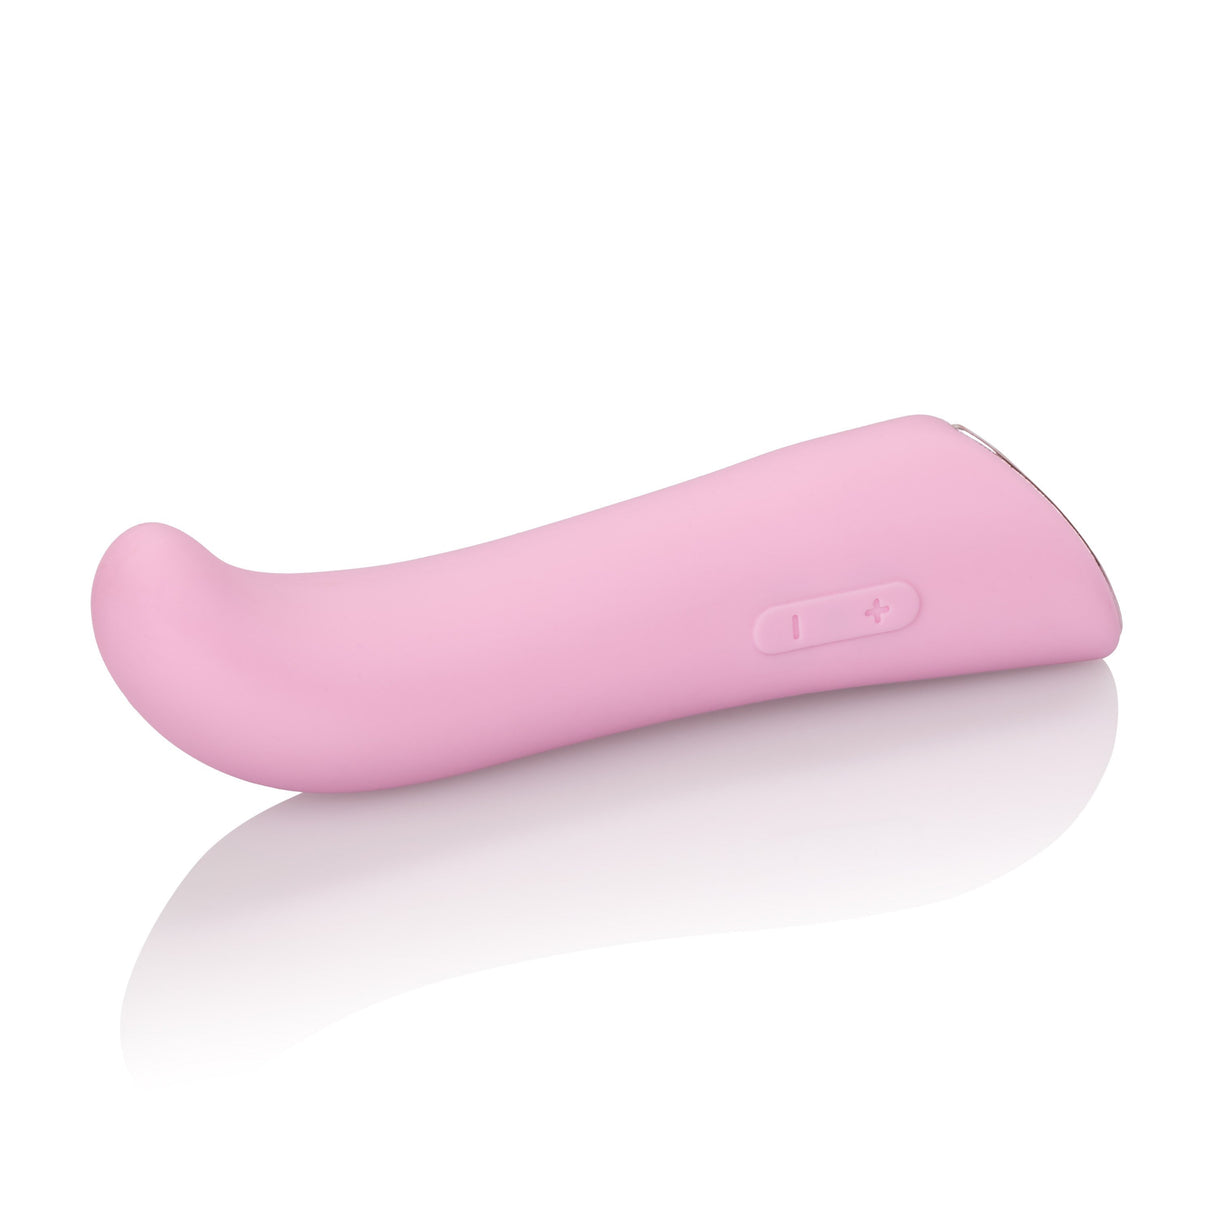 Jopen - Amour Silicone Mini G Spot Vibrator (Pink) JP1028 CherryAffairs